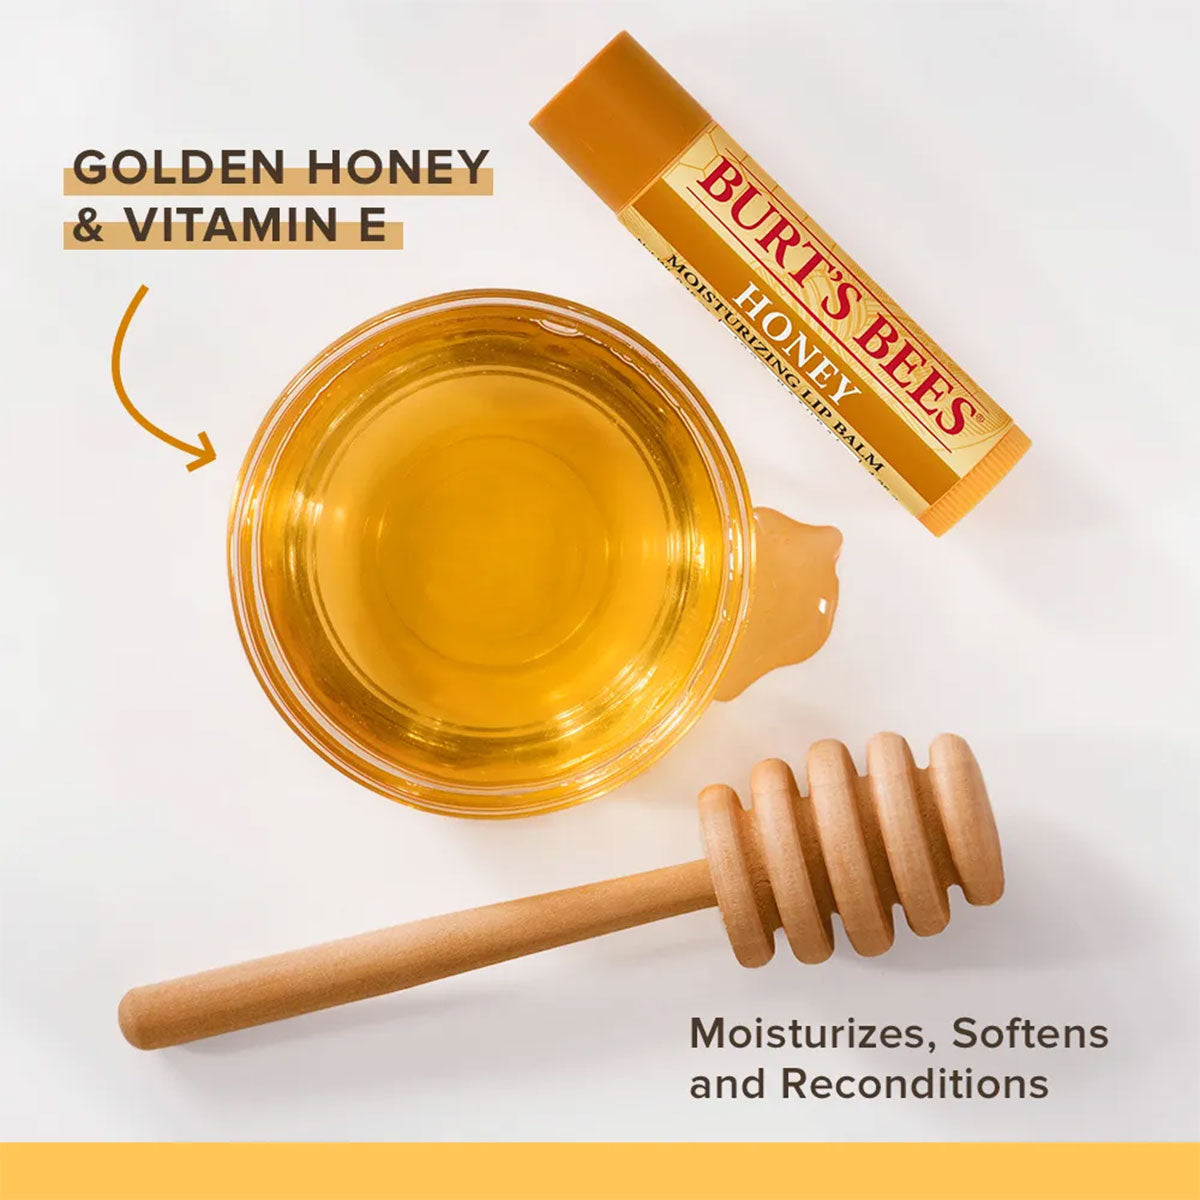 Bálsamo labial Blister Honey Burt’s Bees 4 gr - 🐝🍃 producto 100% natural